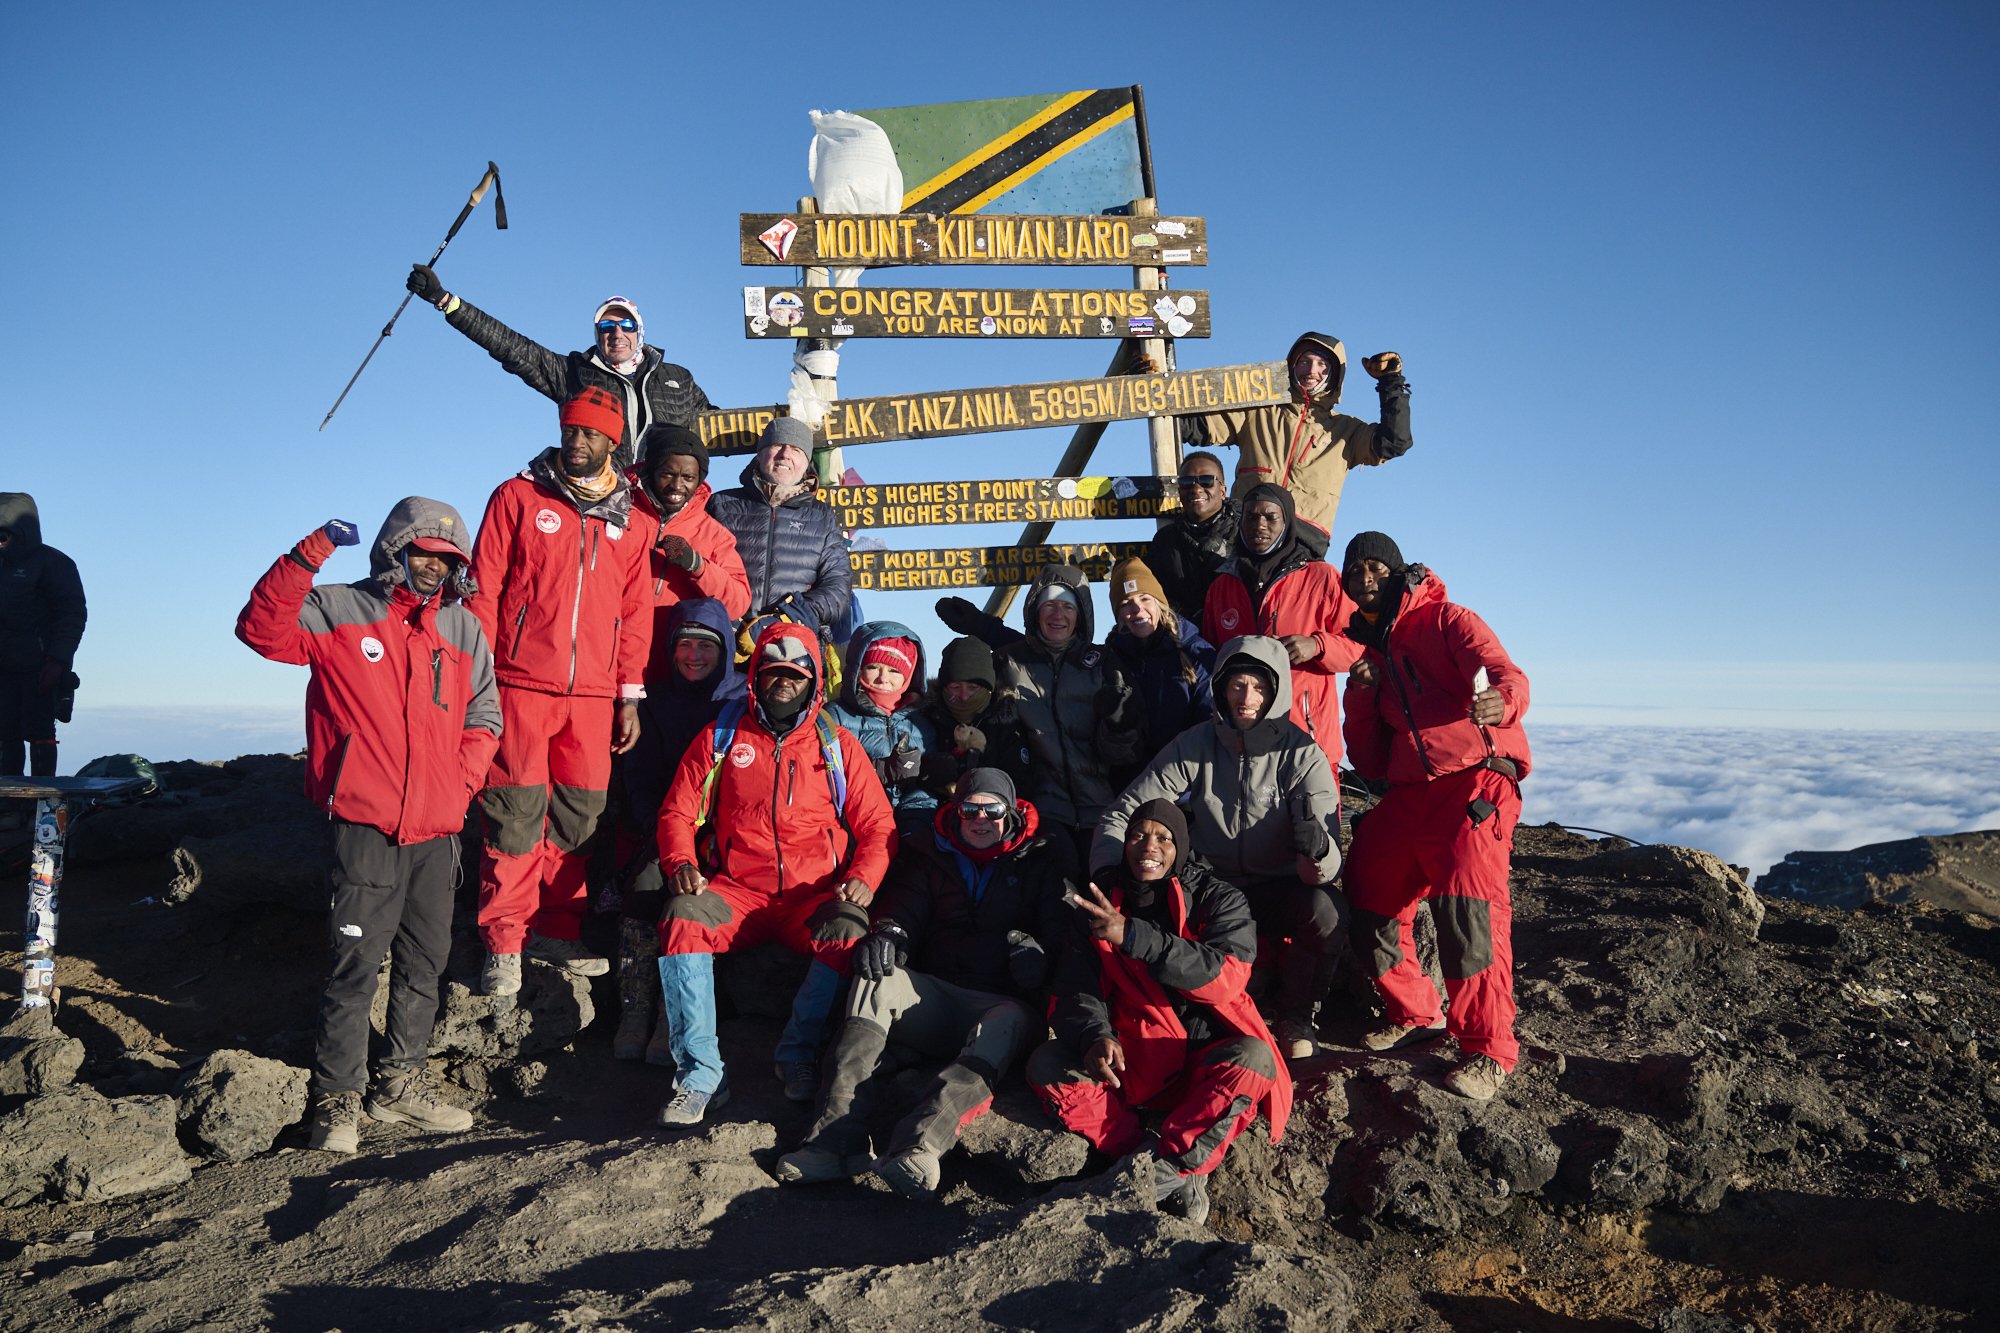 WWT_Africa_Kilimanjaro_BF_7592.jpg